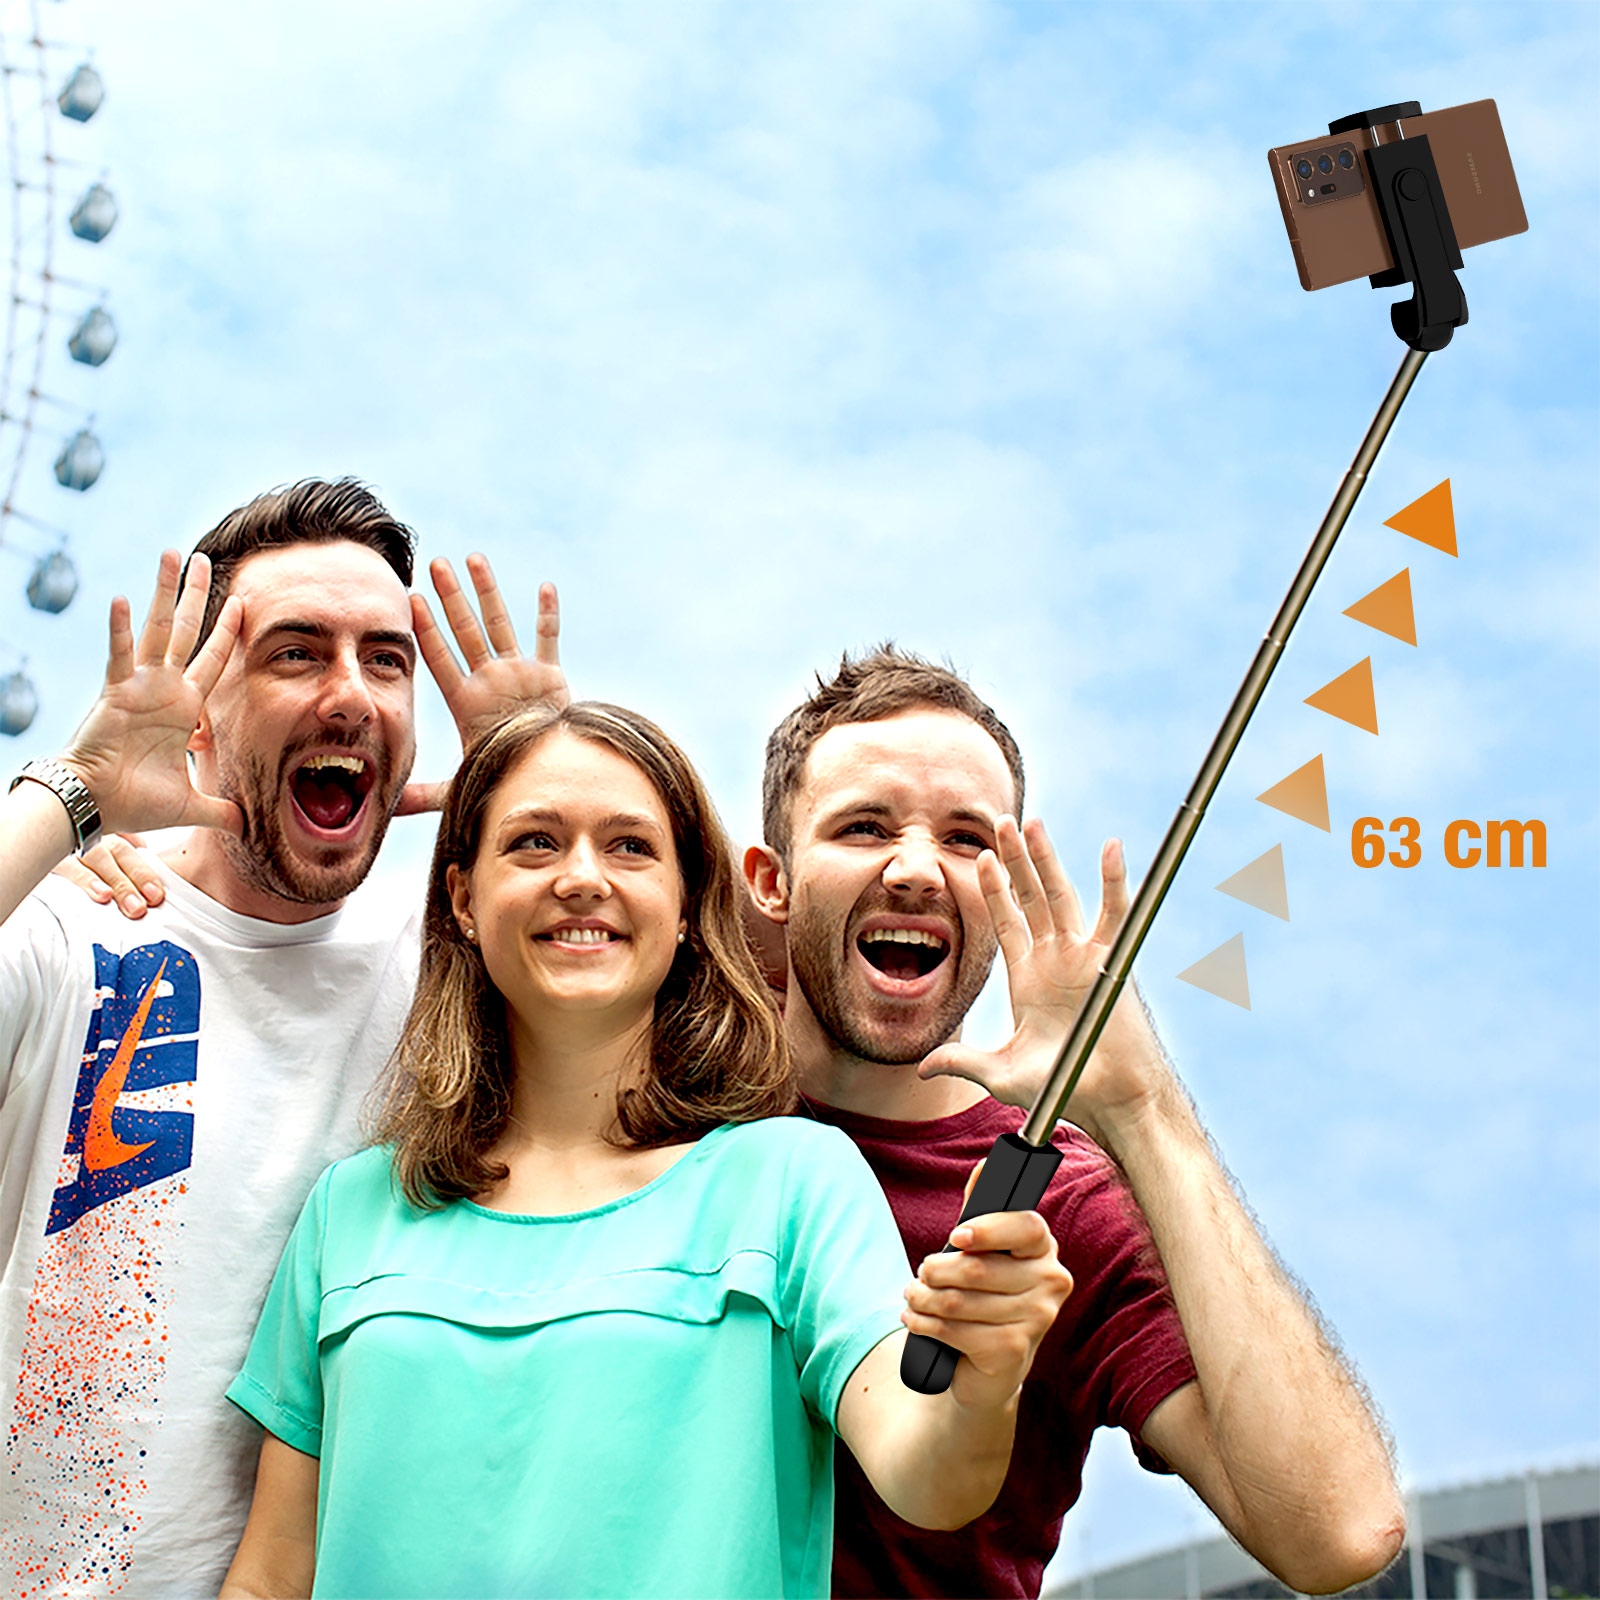 Stick Schwarz LINQ Selfie-Sticks Bluetooth Selfie